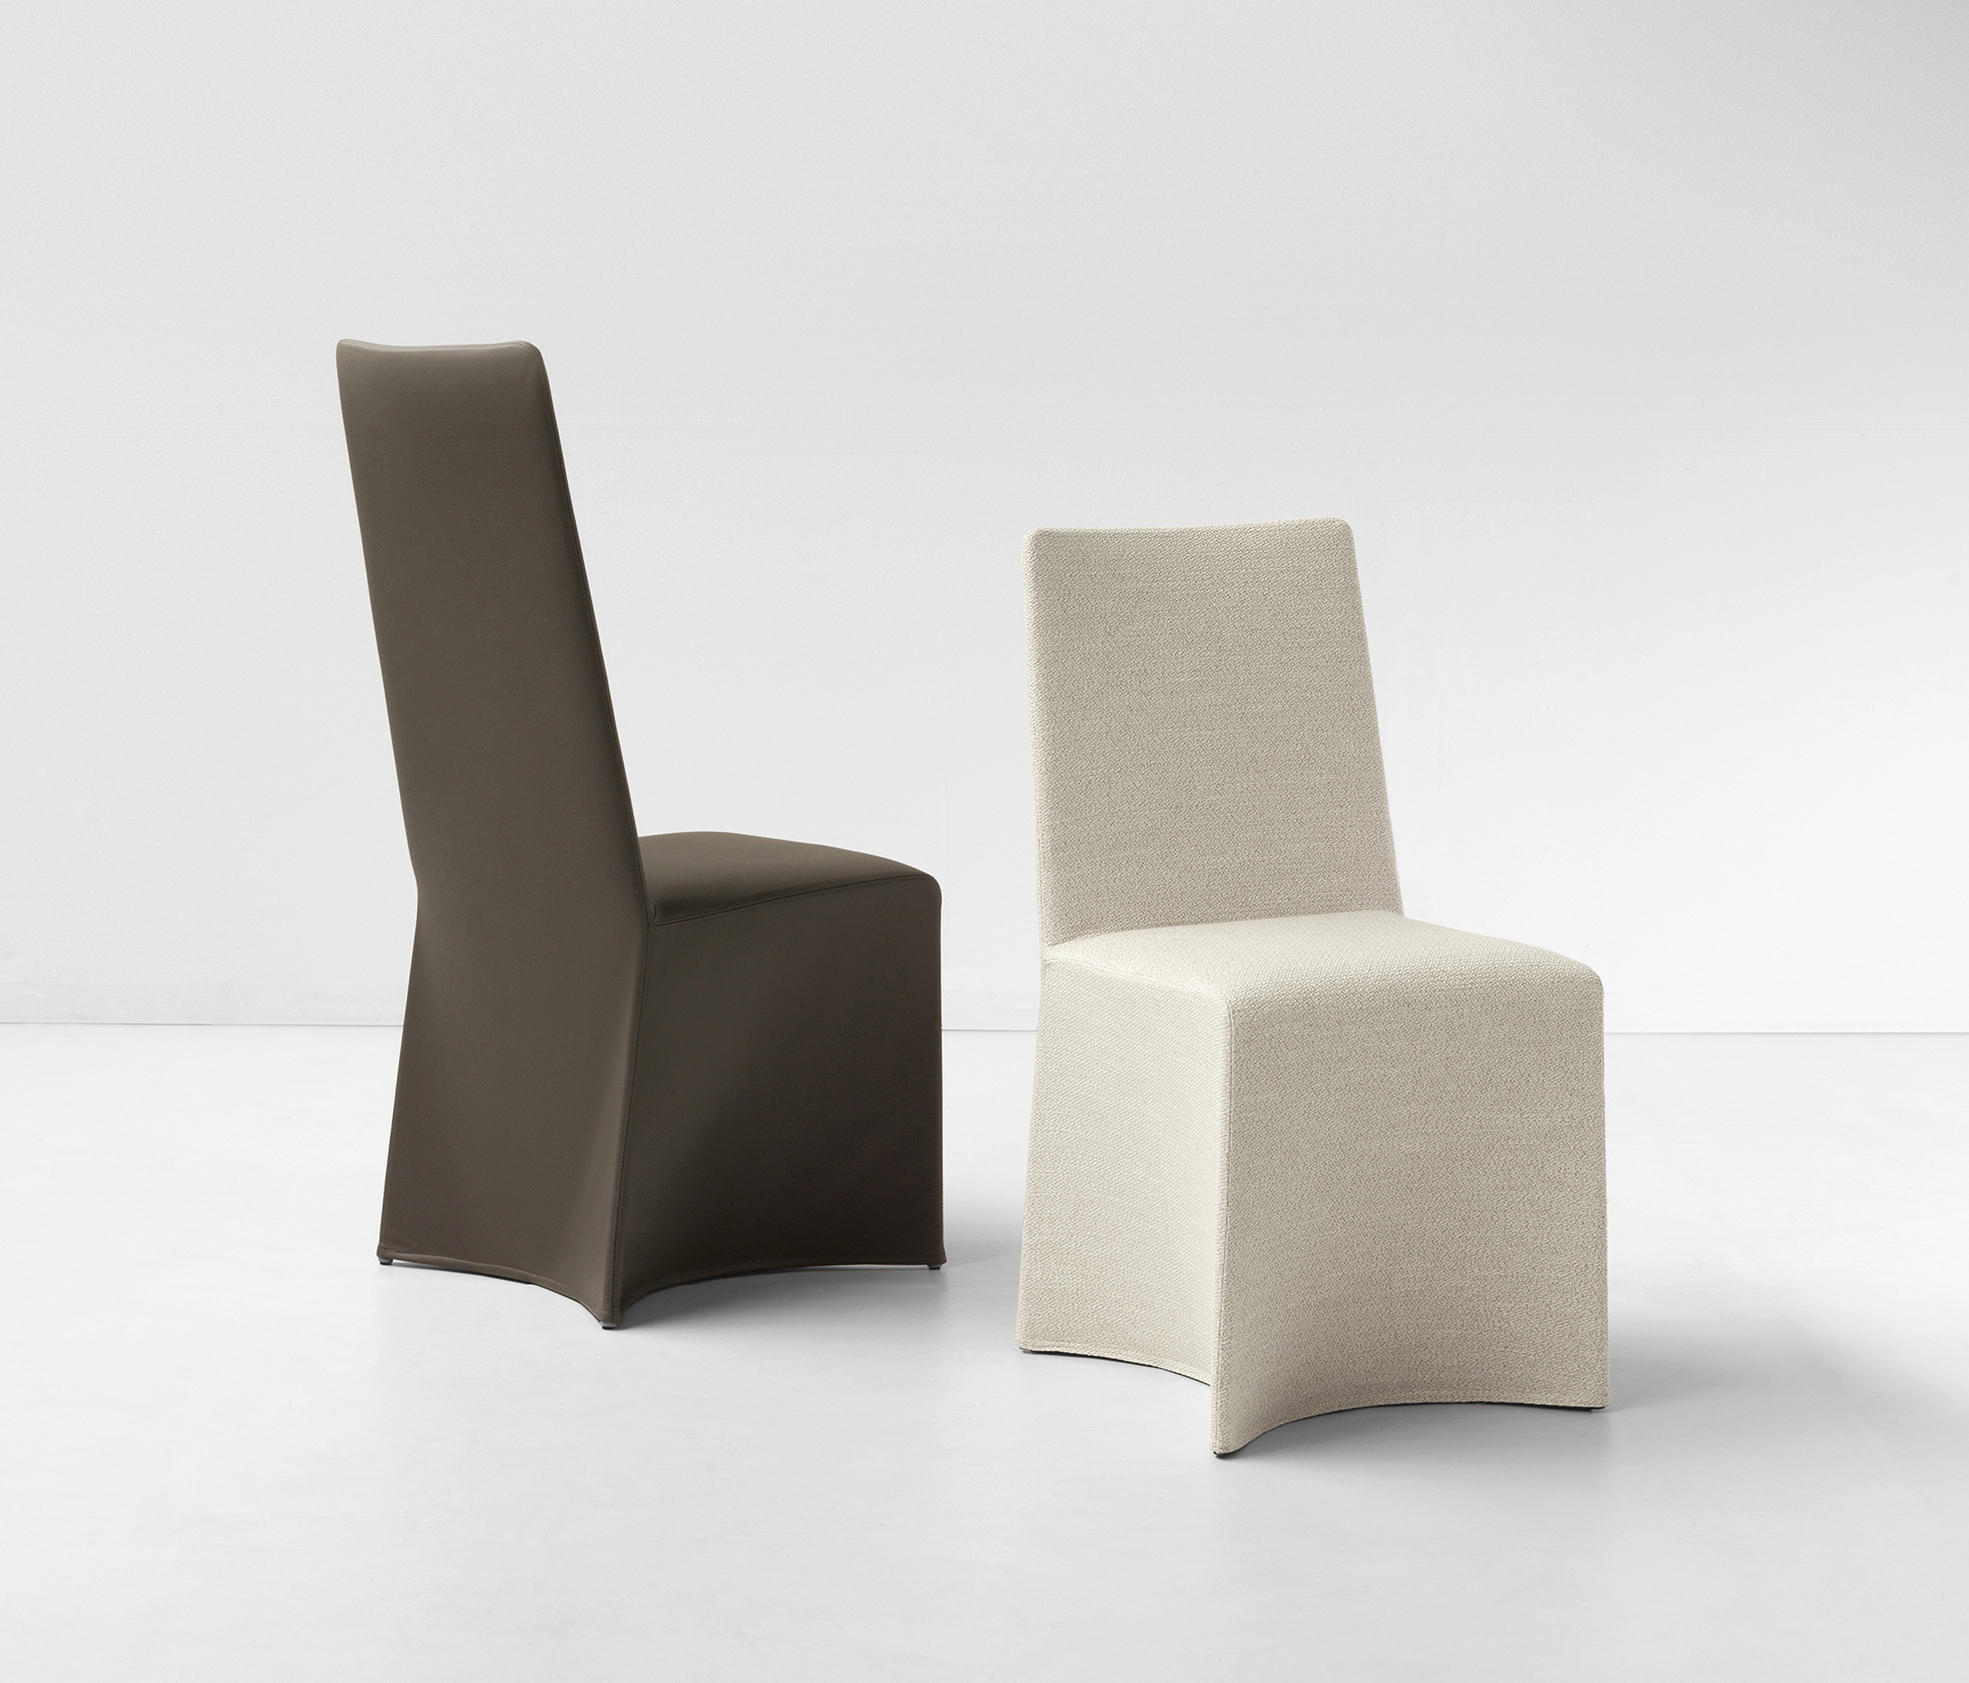 Liry Chair by Bartoli Design for Bonaldo